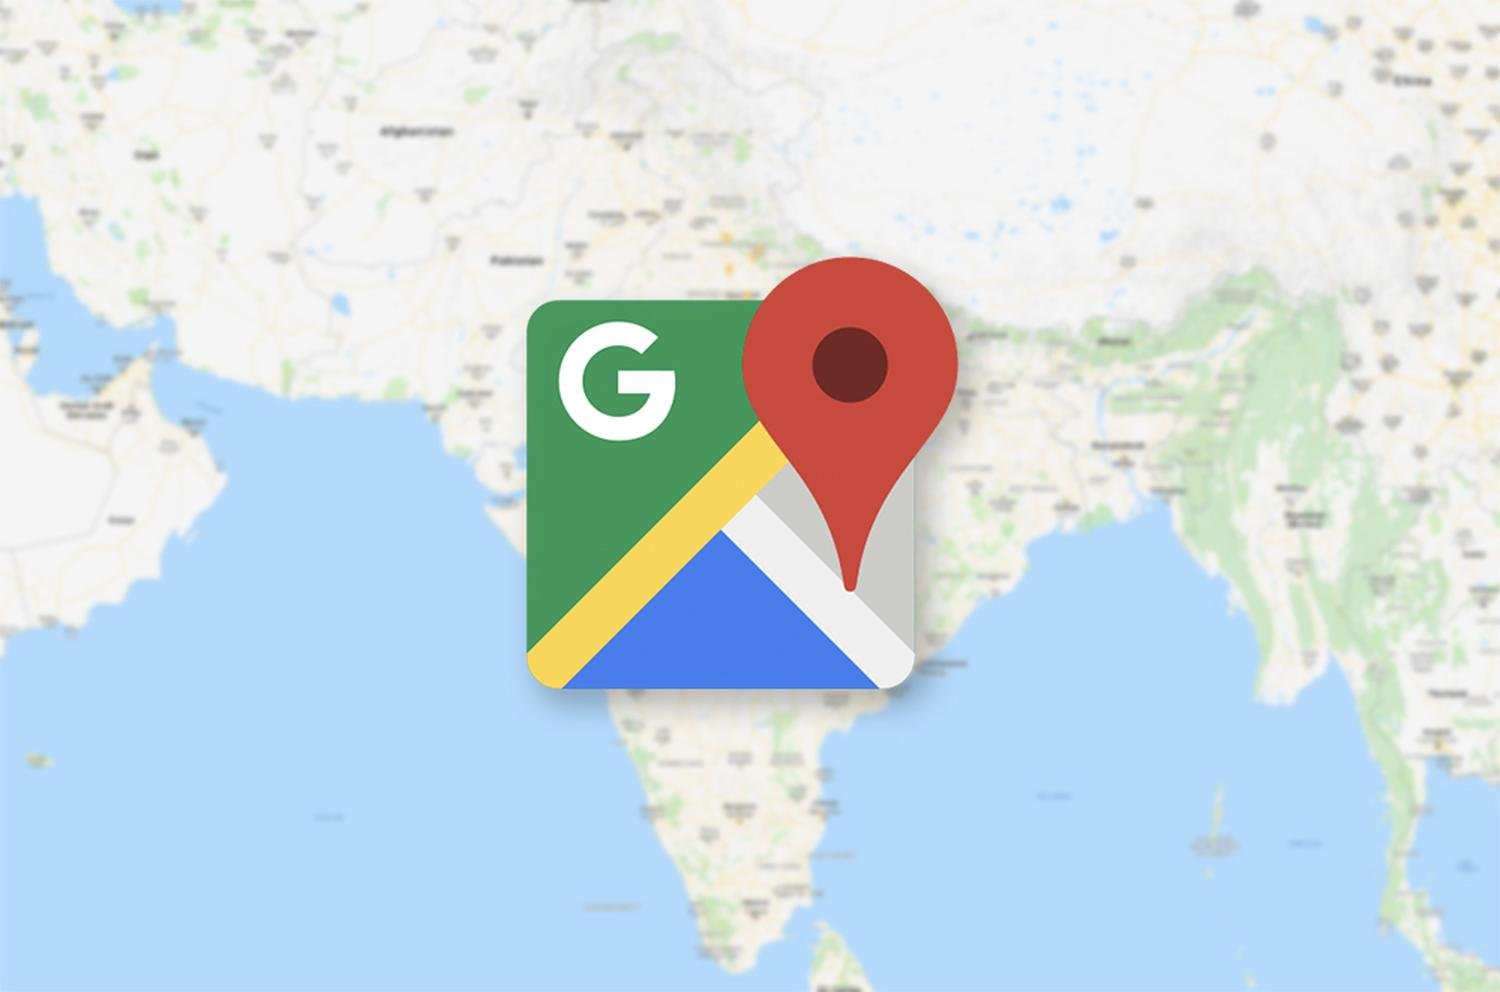 google maps taxi